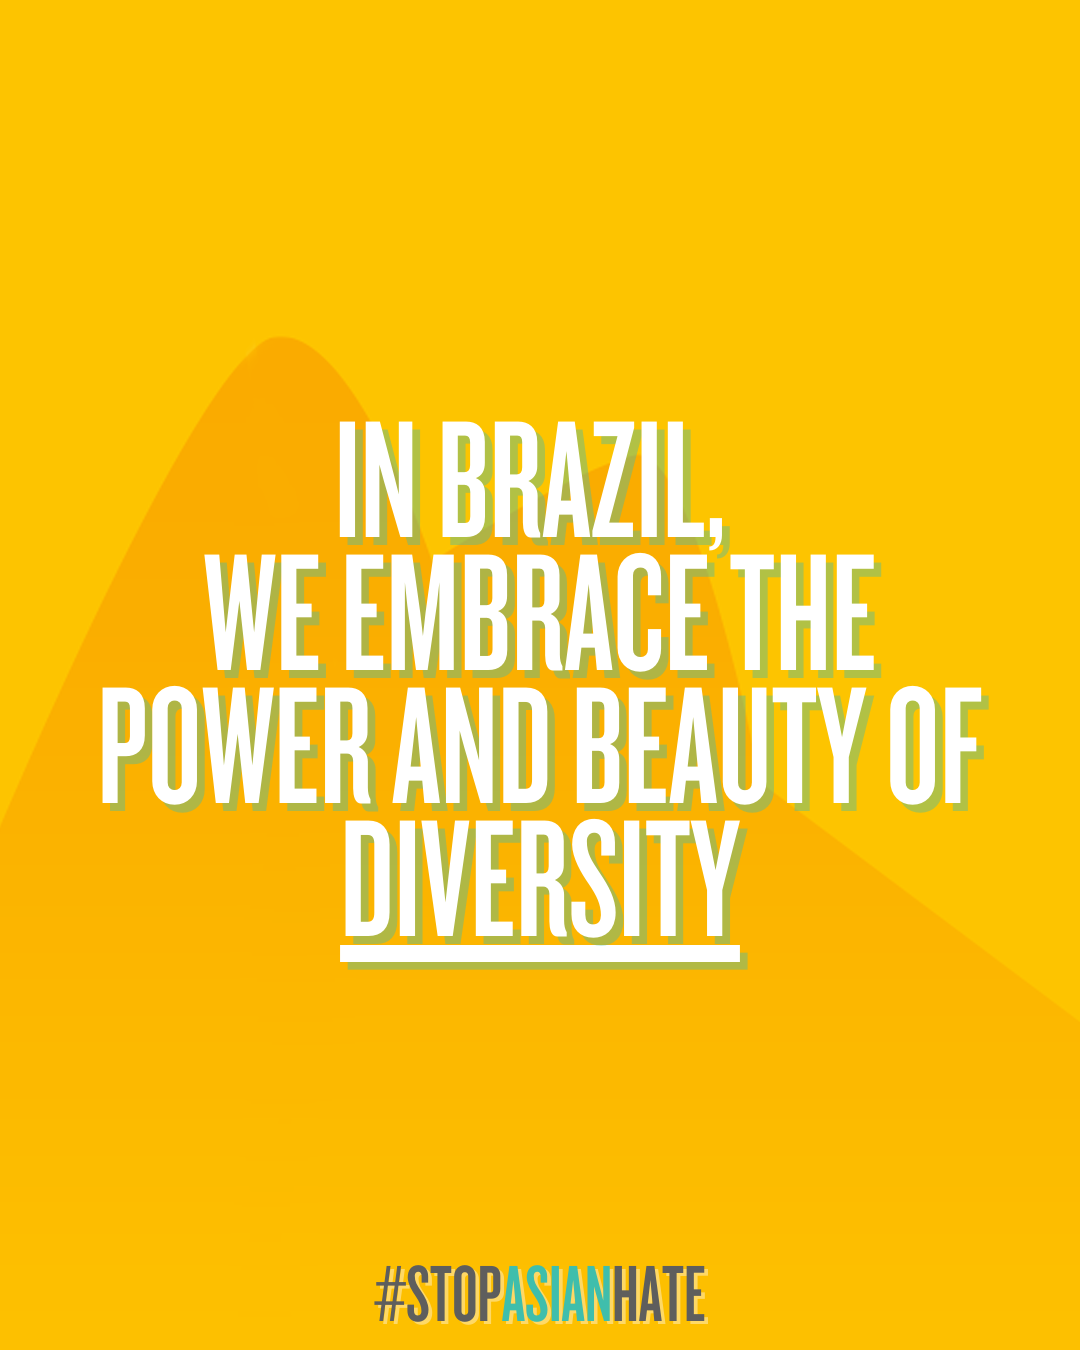 The diversity of beauty in Brazil